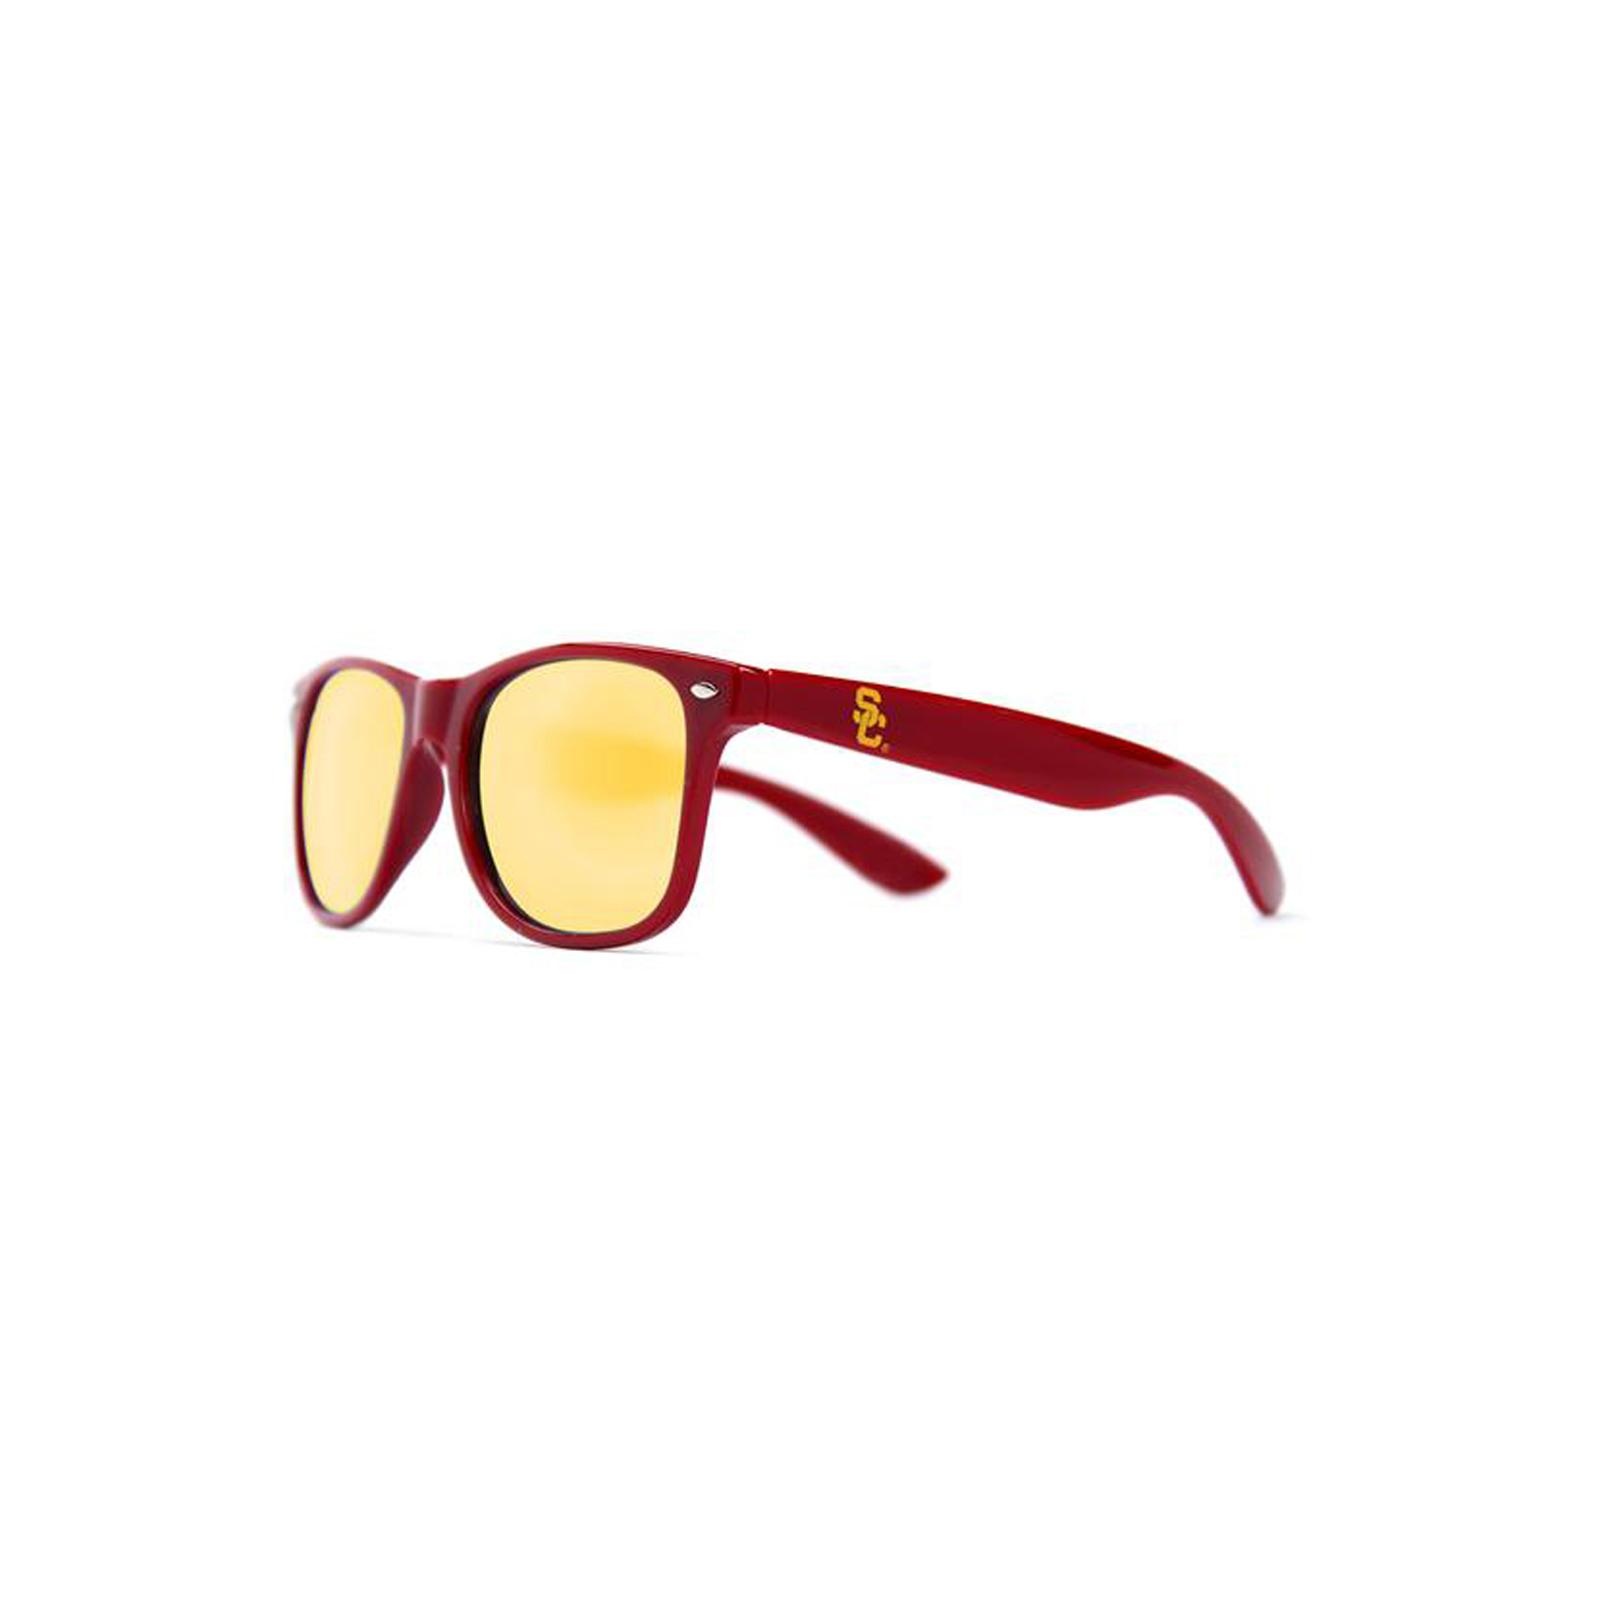 USC Cardinal Frame Sunglasses By Society 43 image11